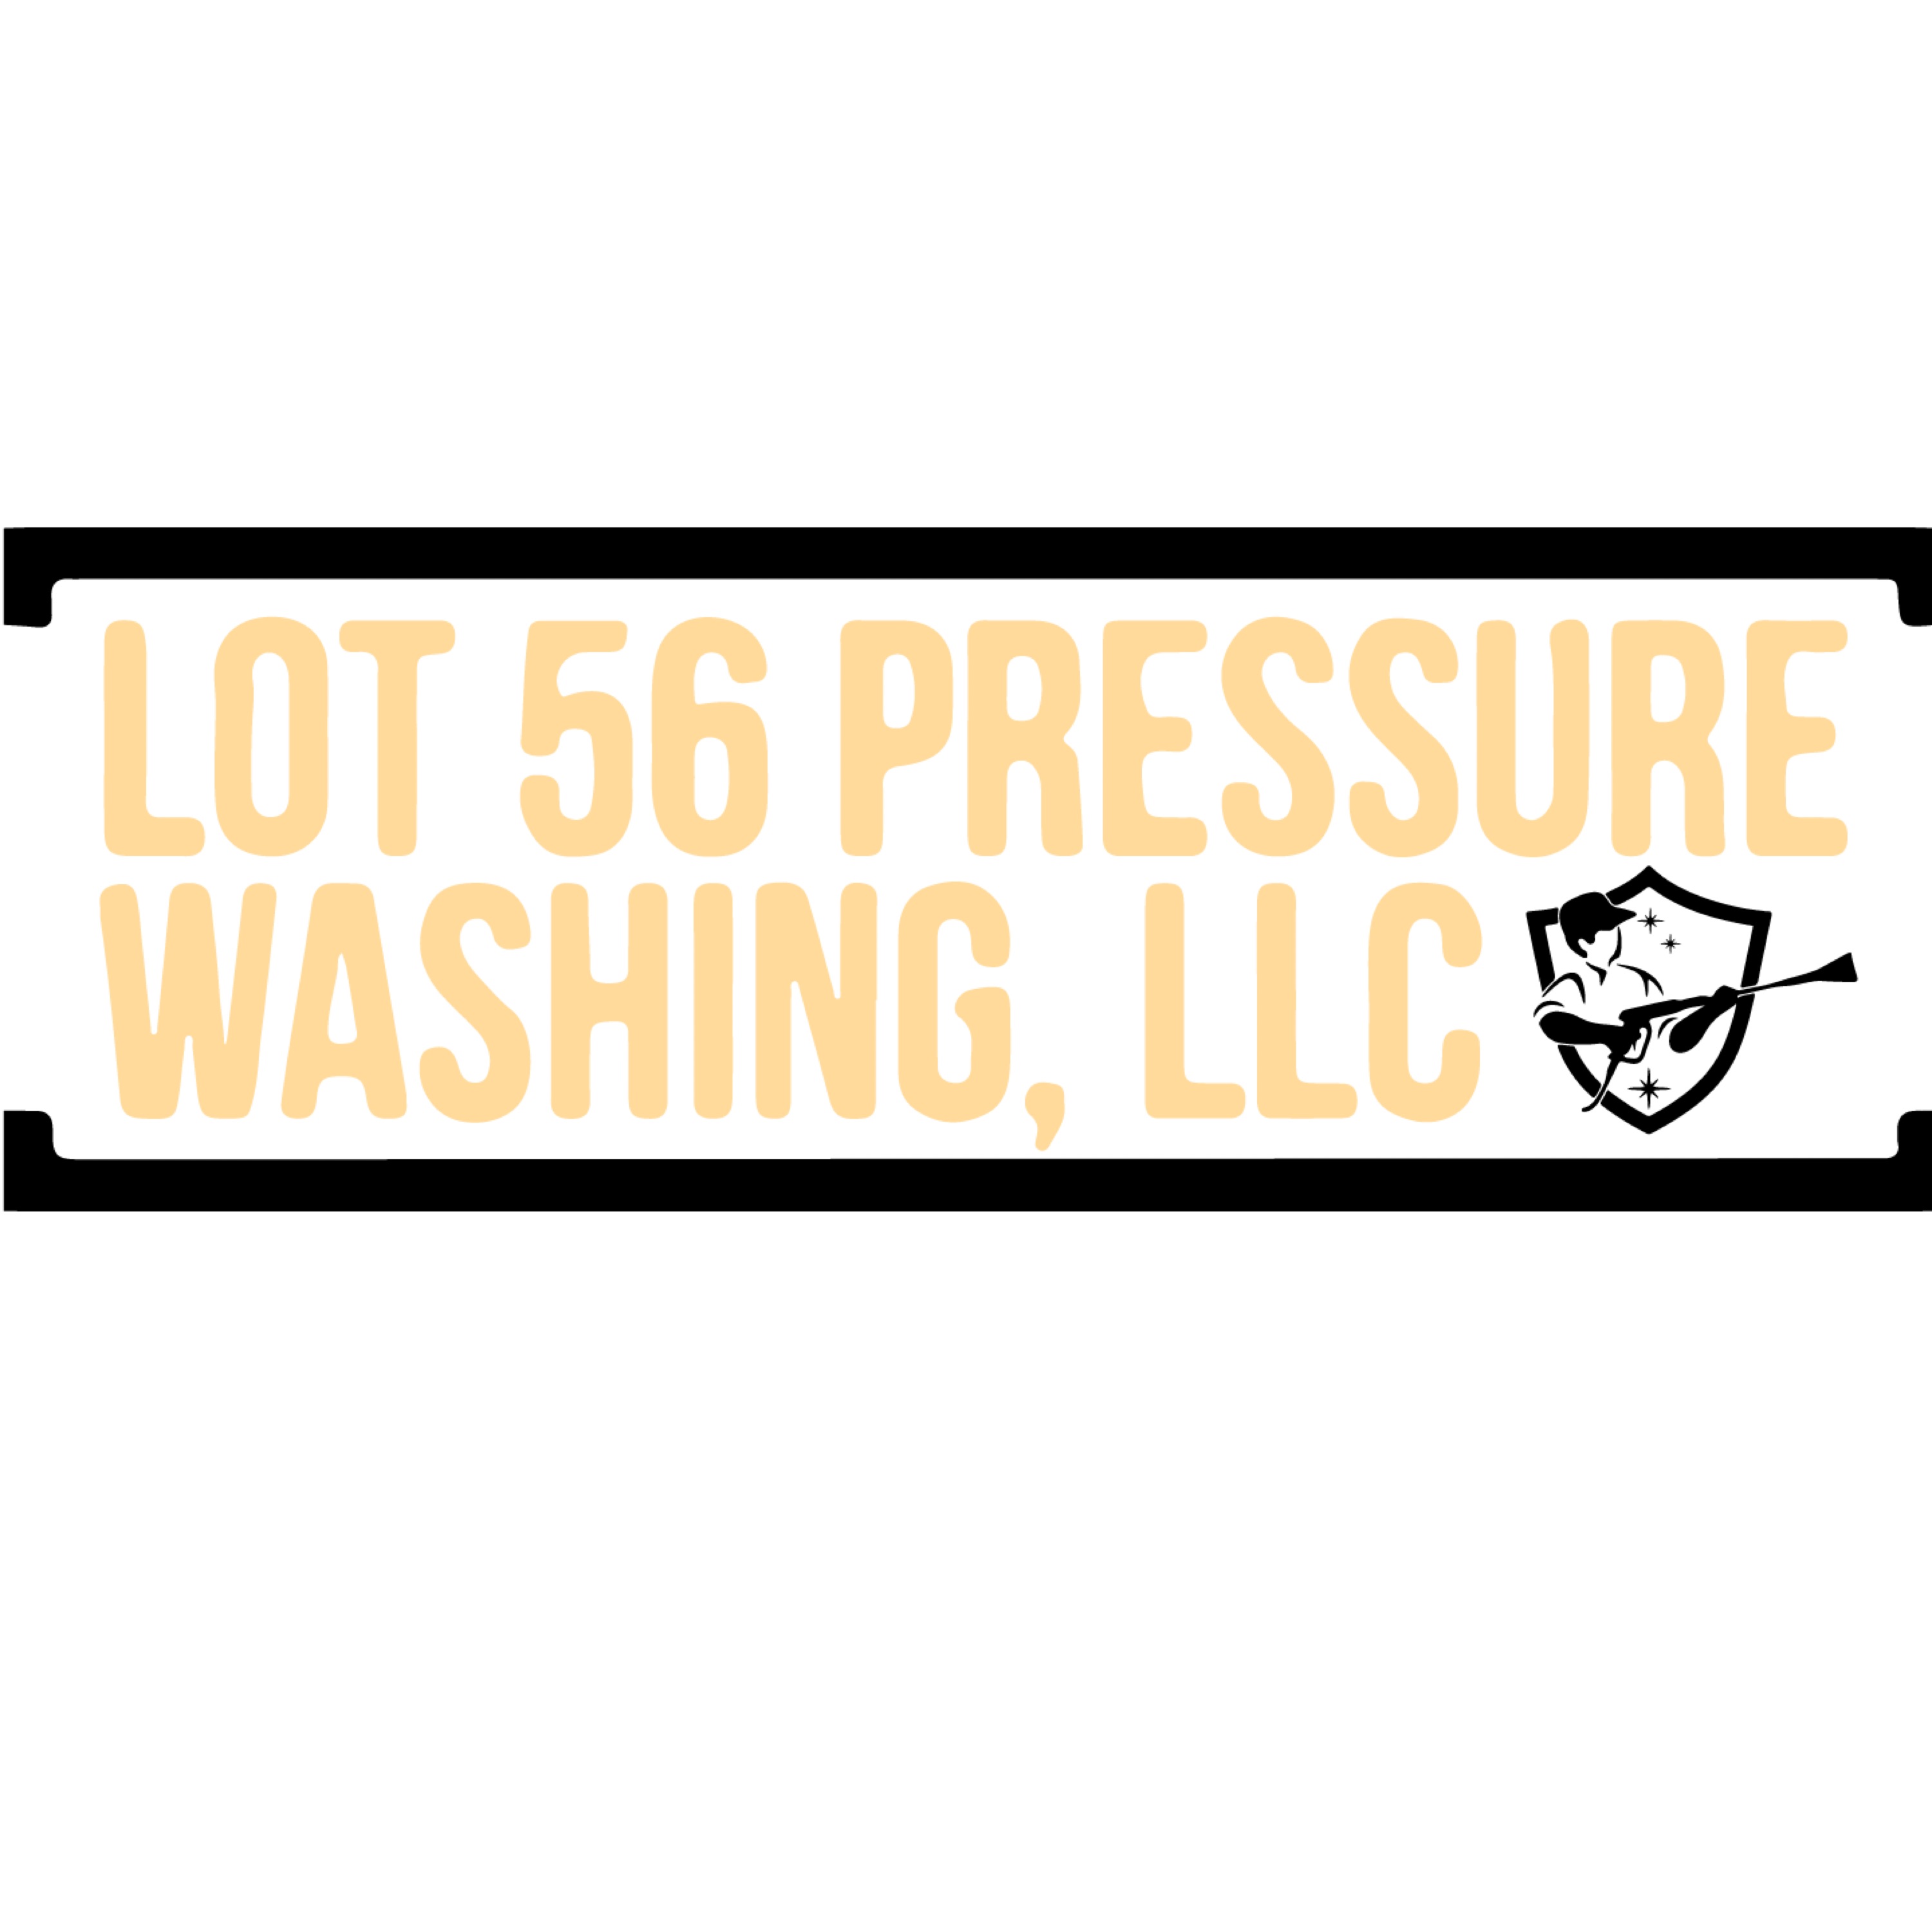 Lot 56 Pressure Washing, LLC Logo